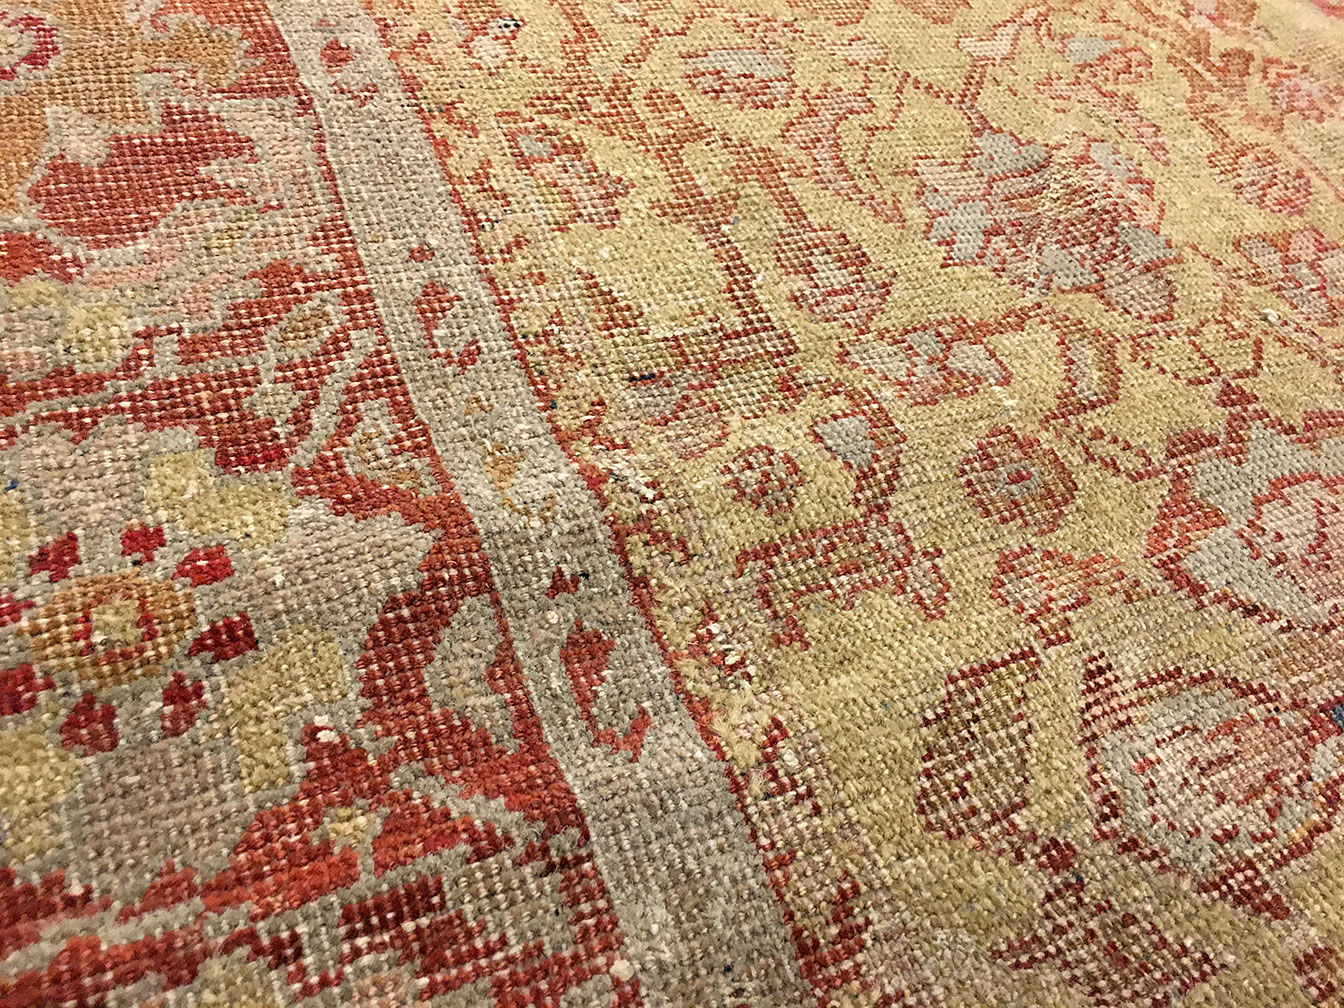 Vintage mahal Carpet - # 53526